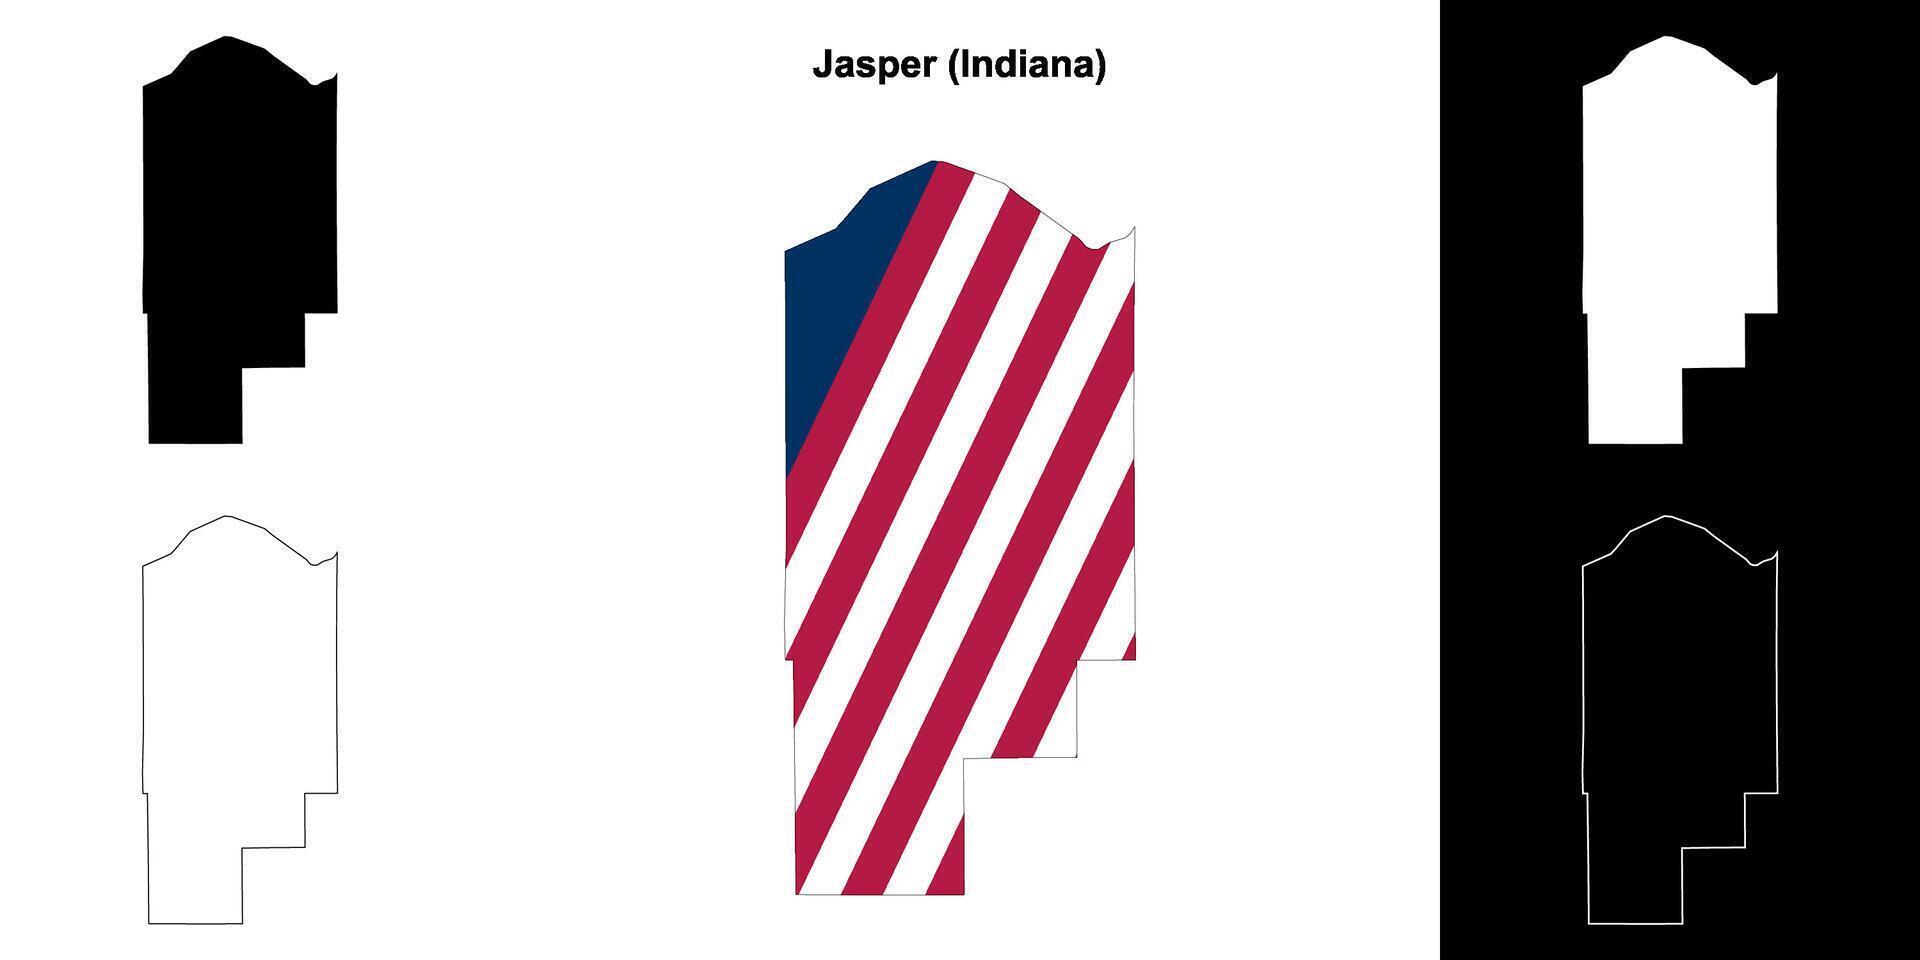 diaspro contea, Indiana schema carta geografica impostato vettore